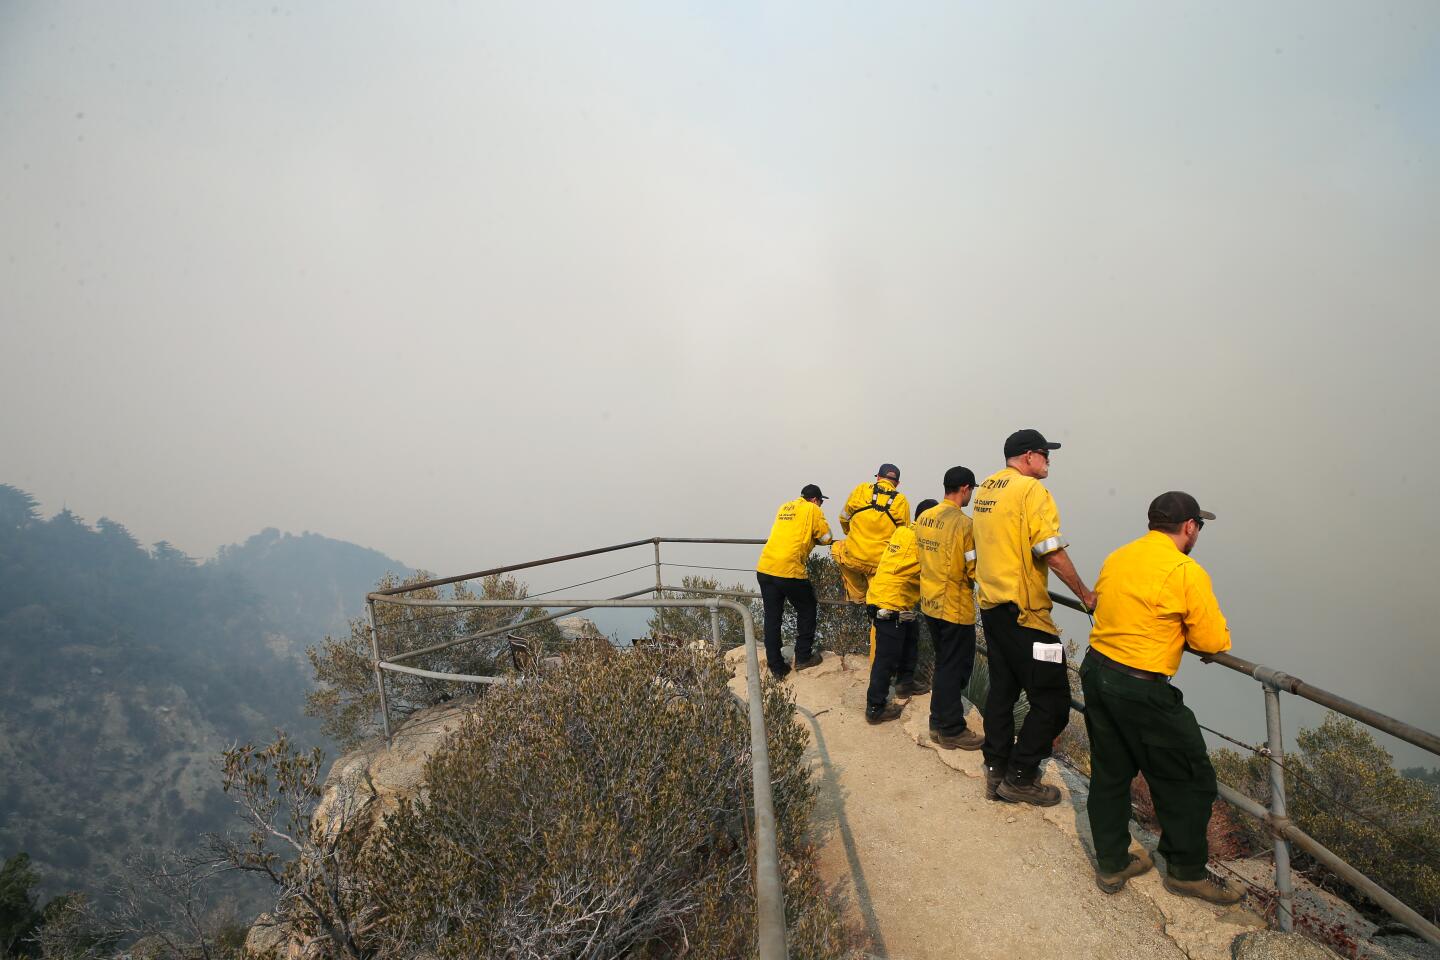 Firefighters keep watch from an overlook on Mt. Wilson as the Bobcat fire burns.